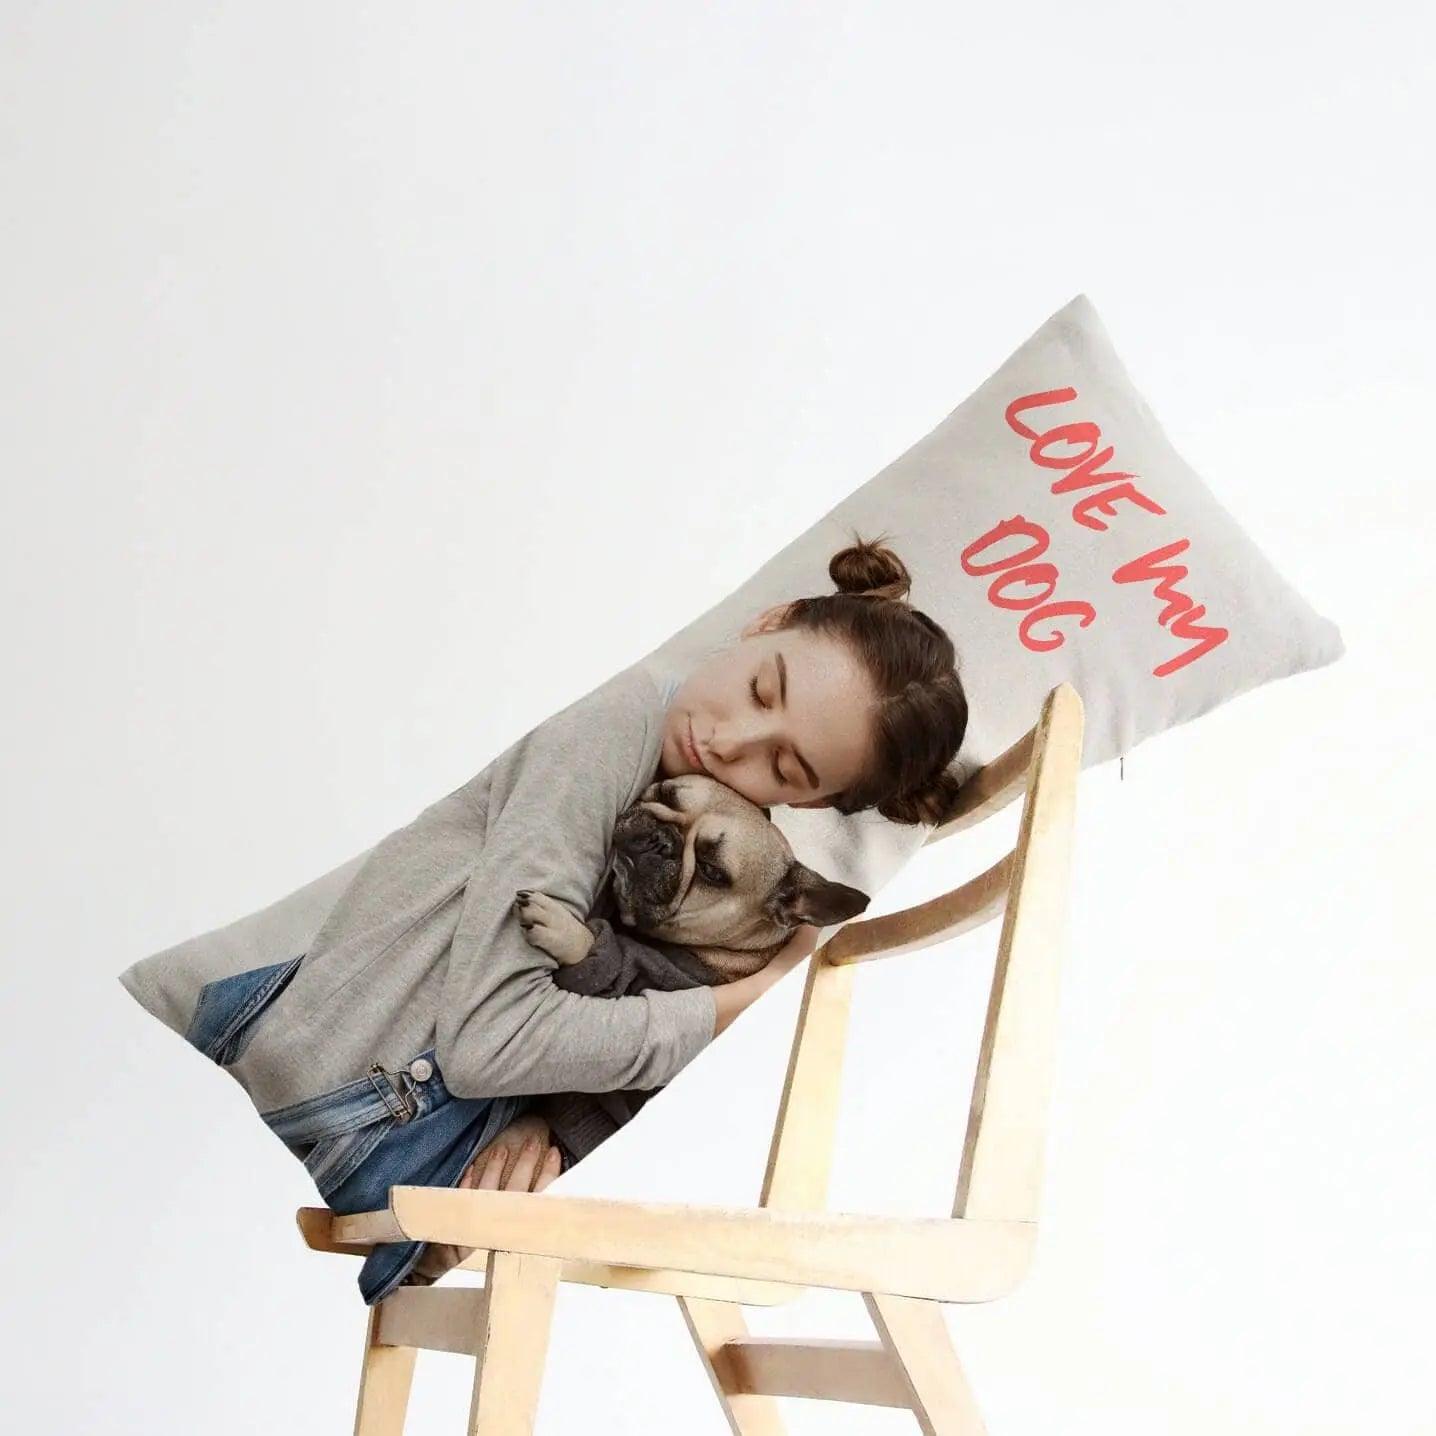 Custom Photo Pillow 